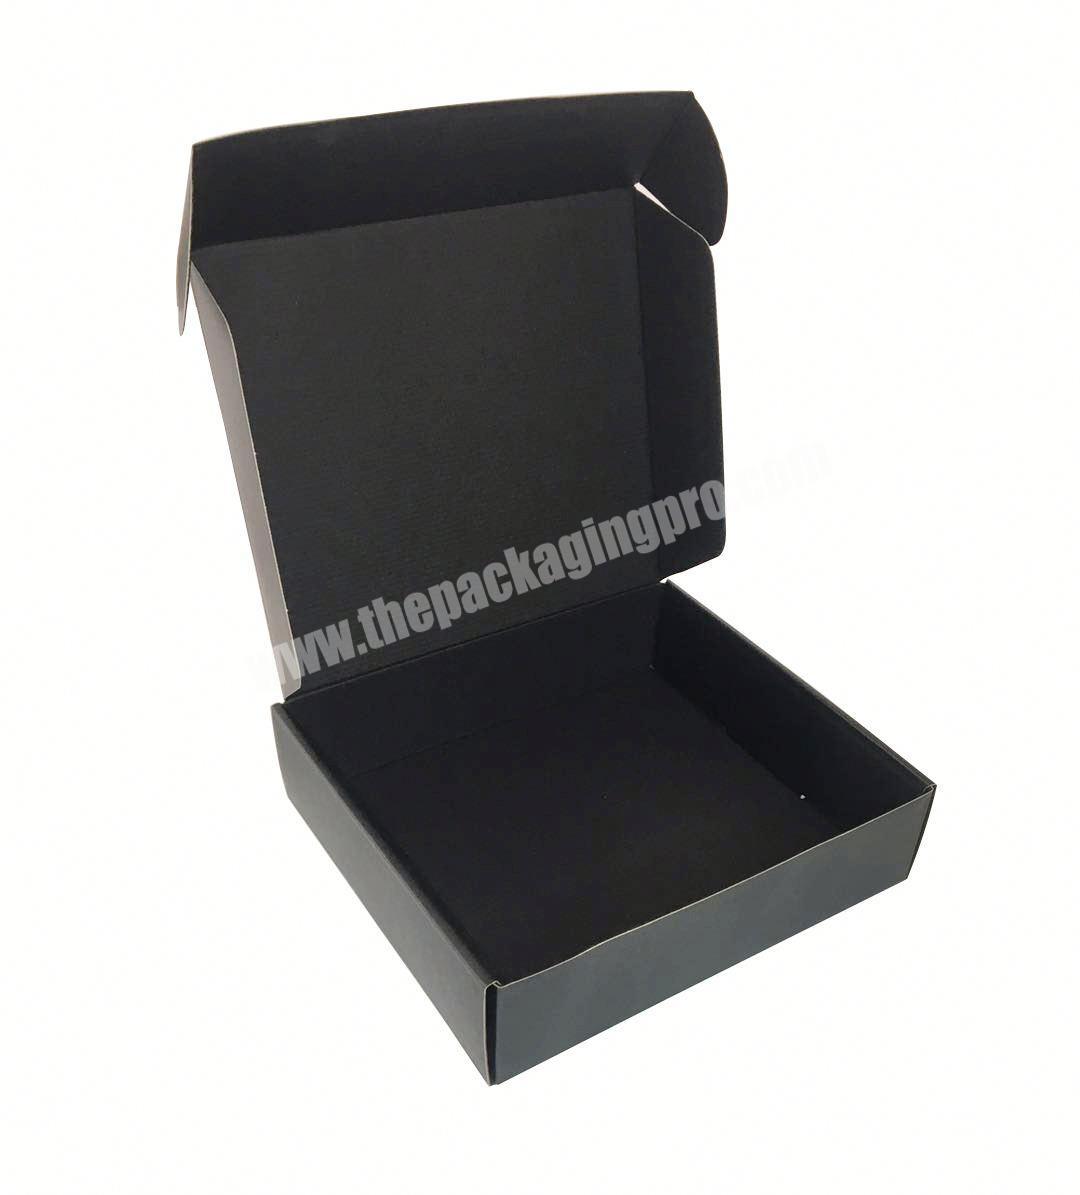 Black cardboard hair box printing and packaging subscription box